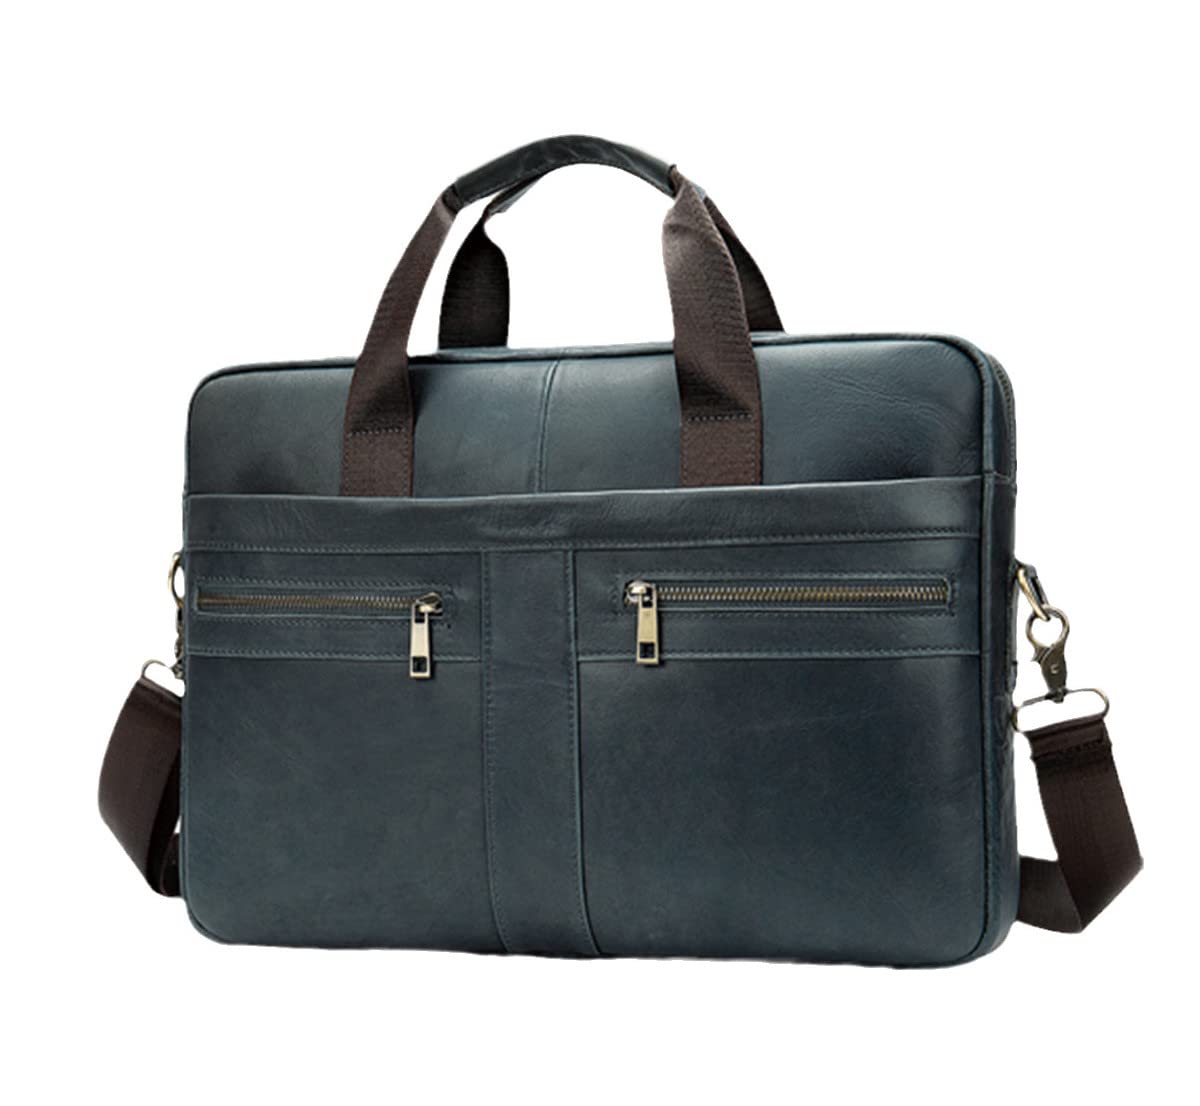 Haitpant Men's Genuine Leather Briefcase Laptop Bag Natural Leather Messenger Briefcases Bags